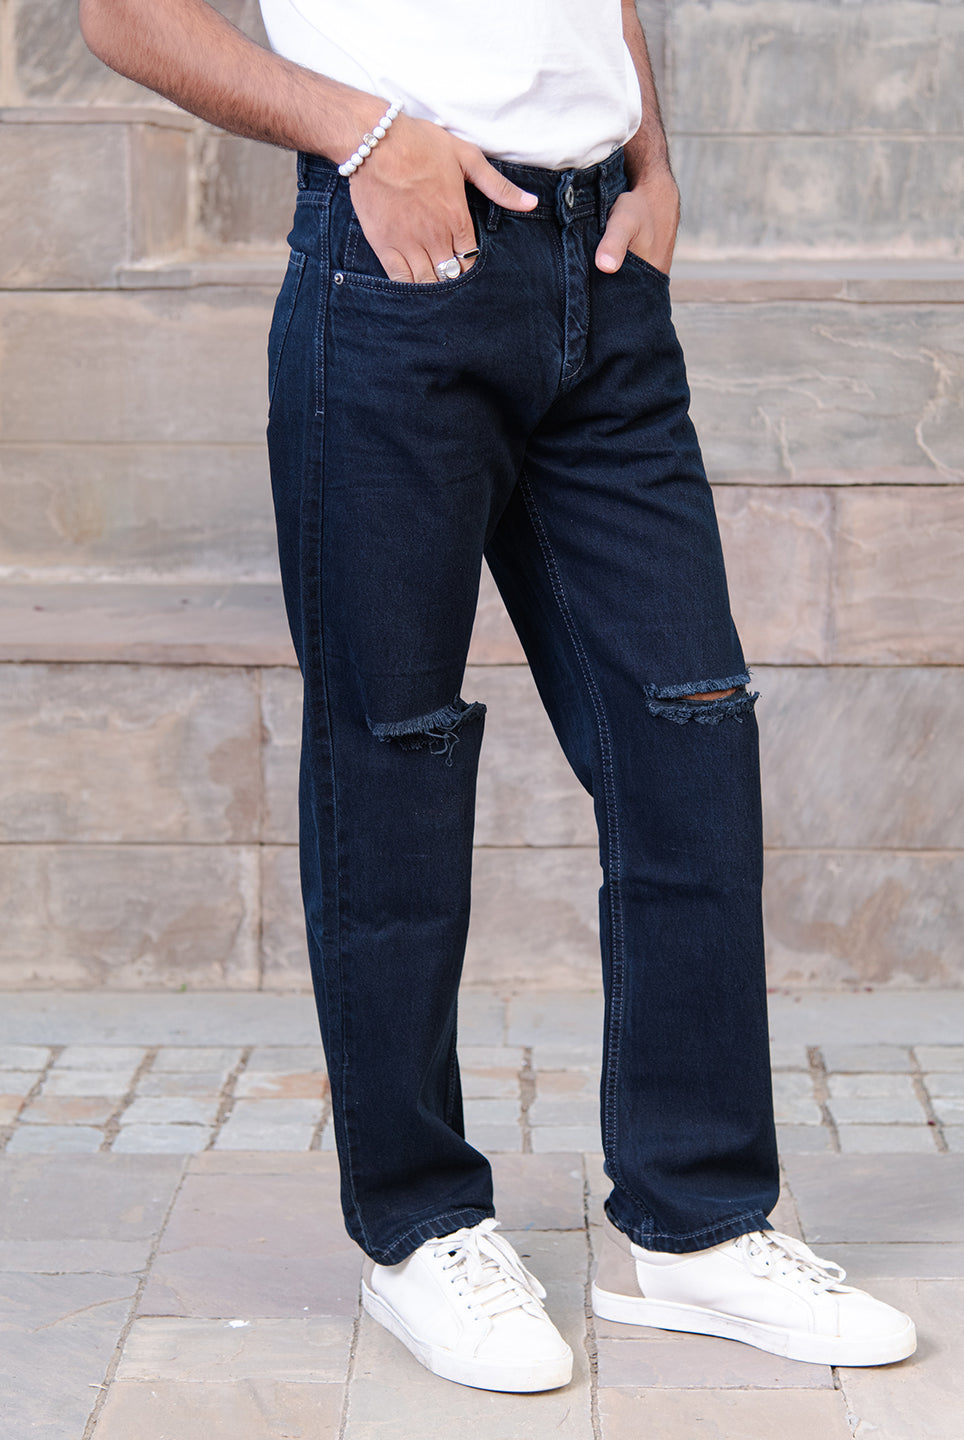 Navy blue denim jeans